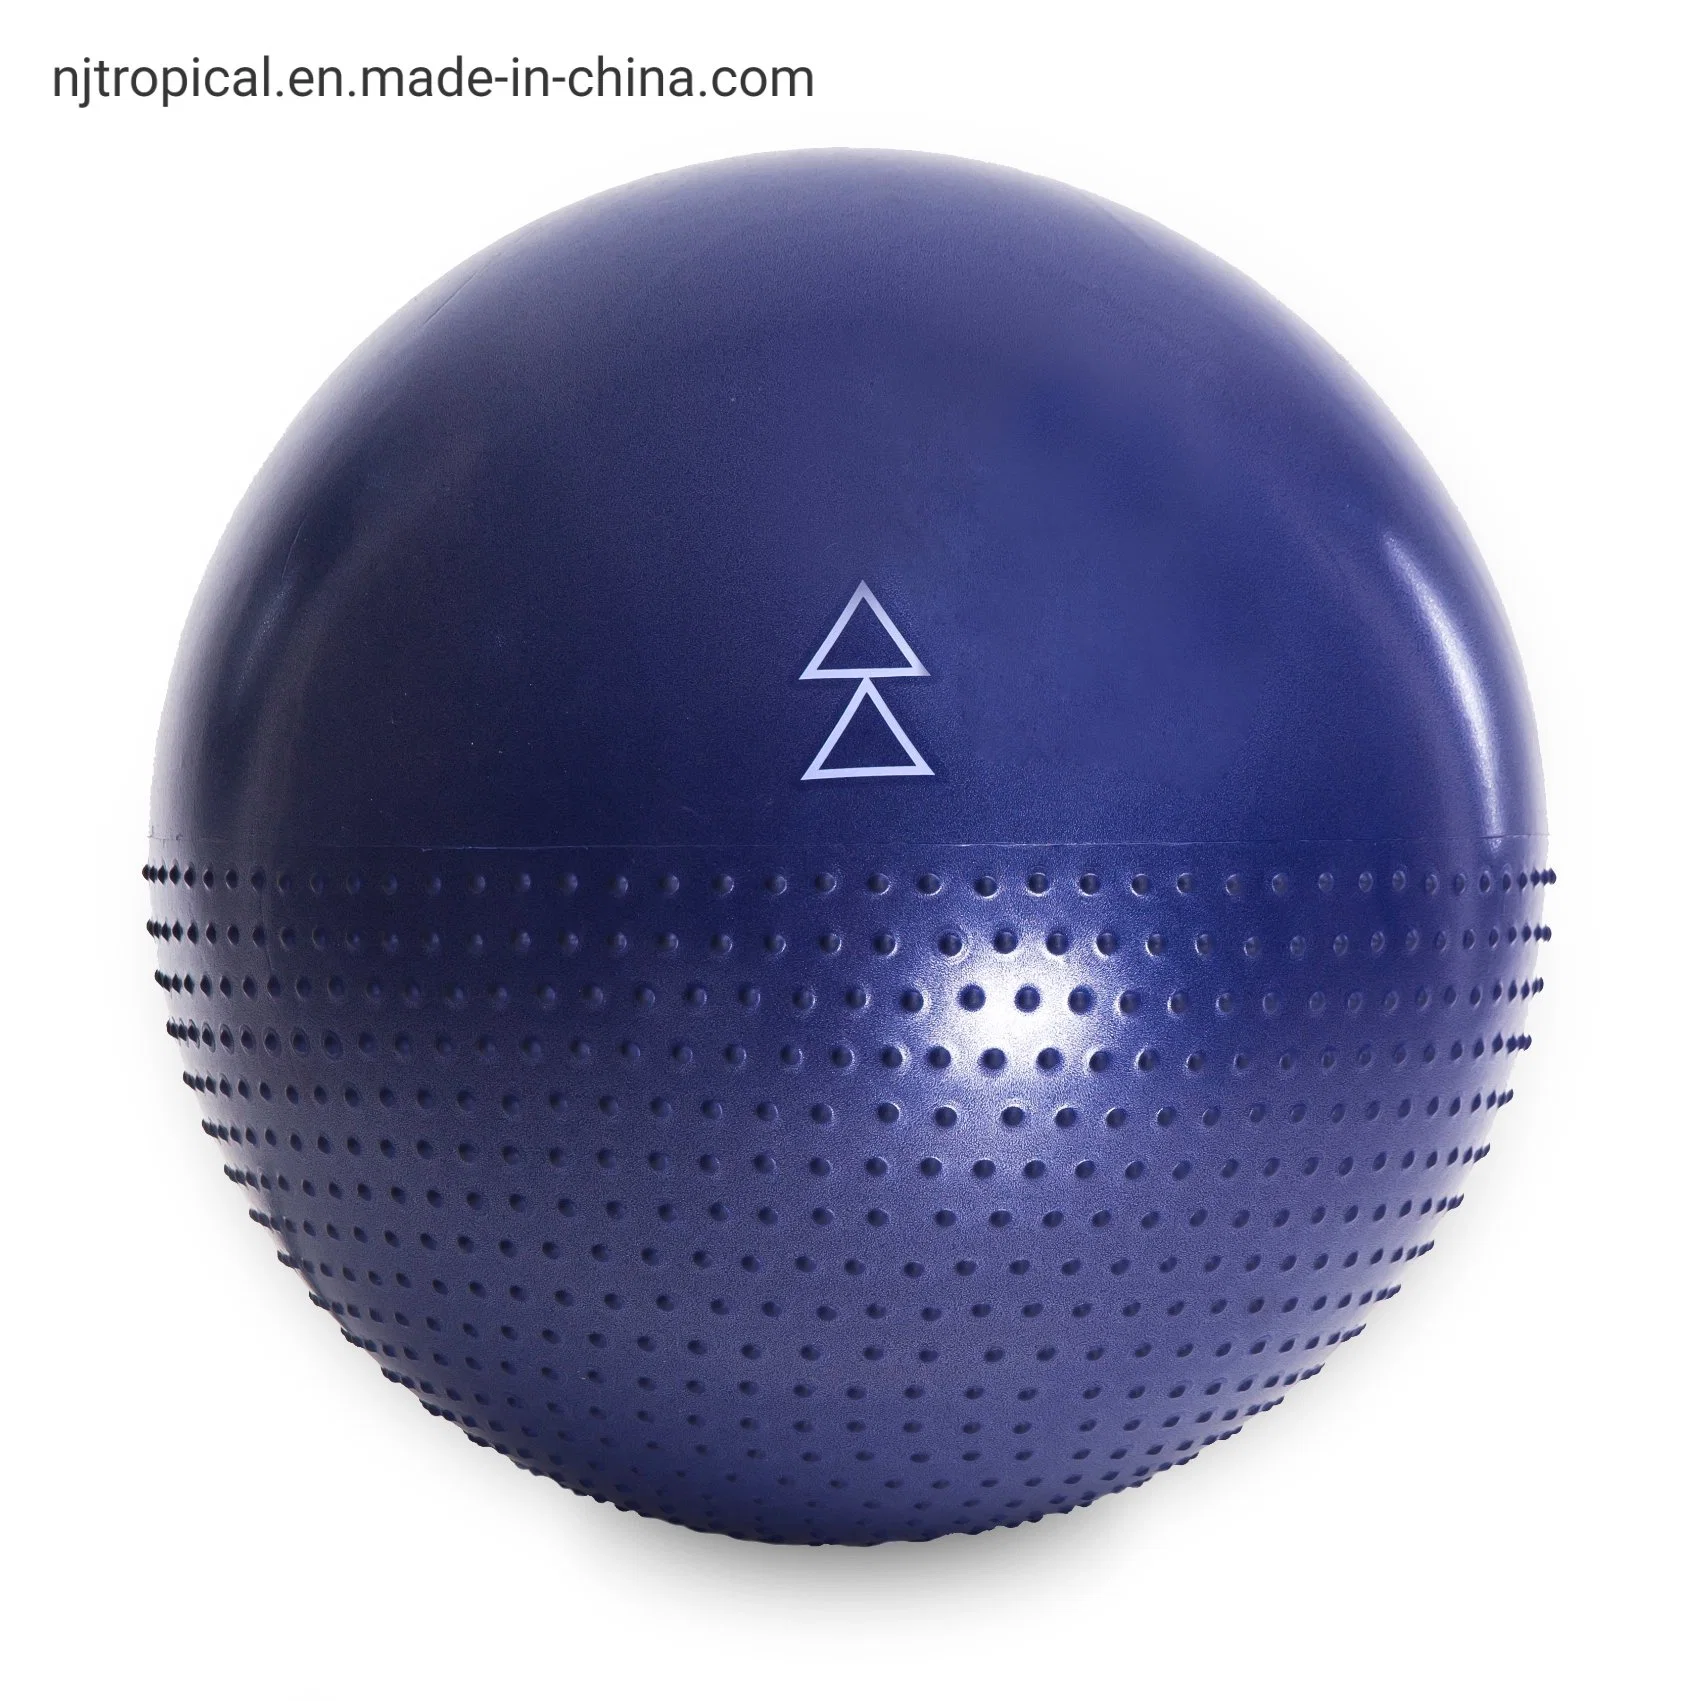 Fabric Inflator Gym Fitness Equipment Yoga Ball